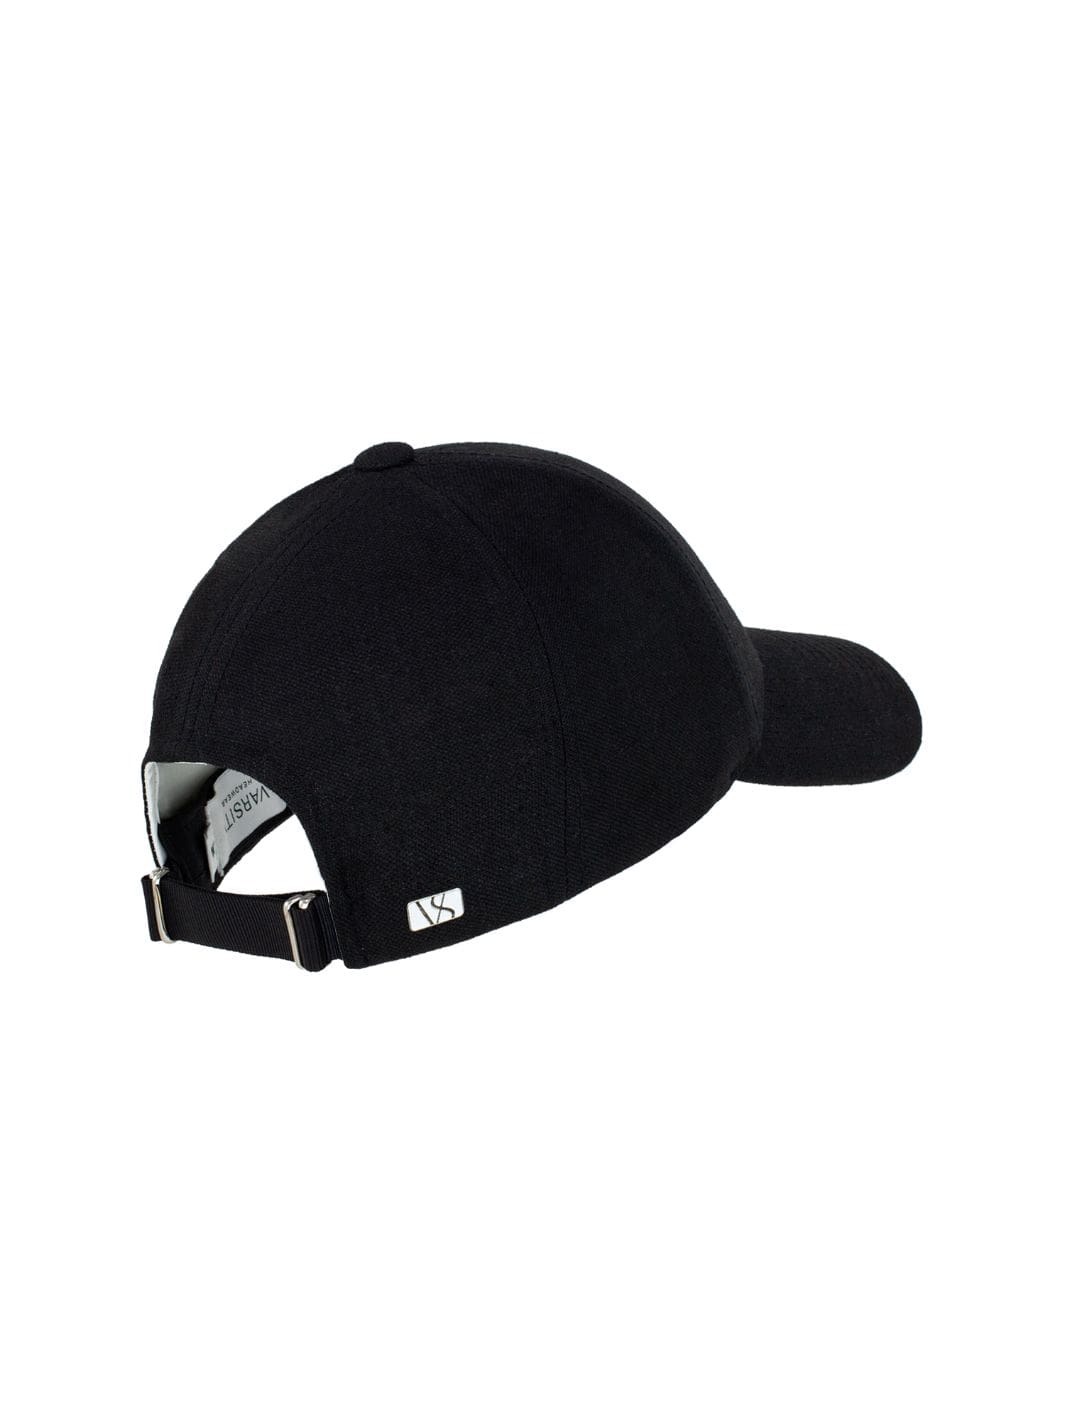 Varsity Headwear Accessories Cap | Licorice Black Linen